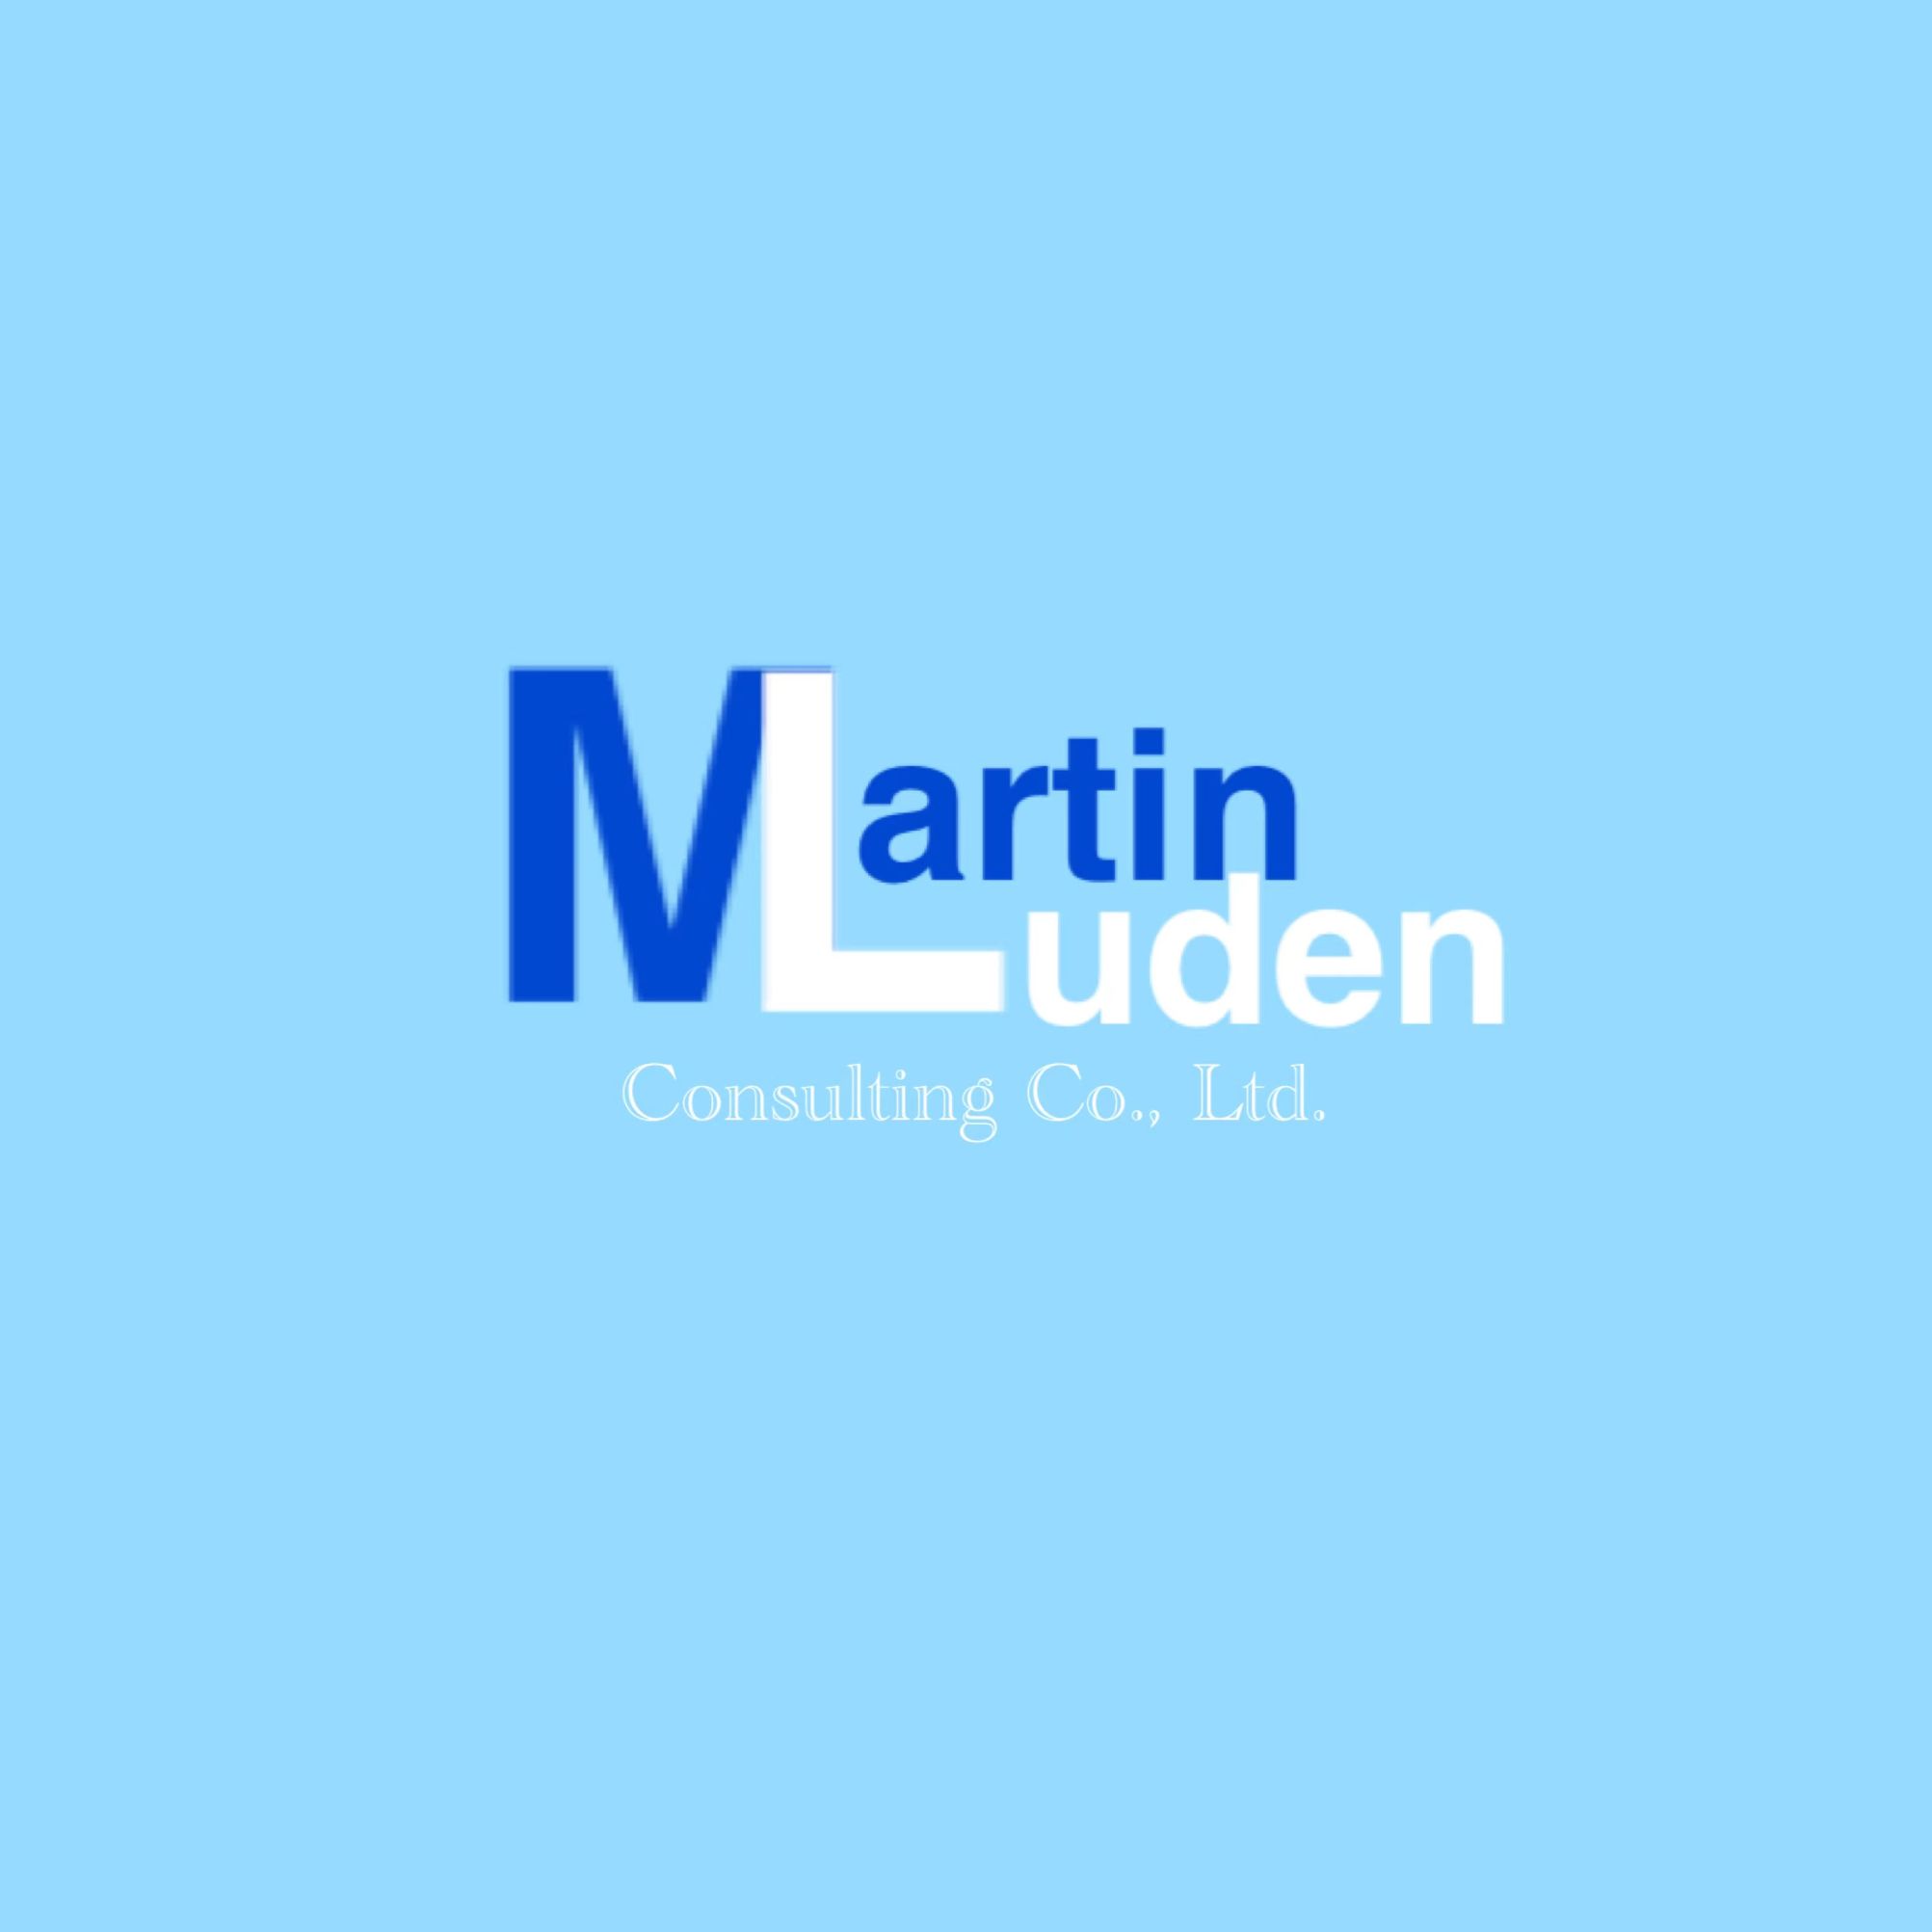 Martin Lunden Consulting Co., Ltd. logo